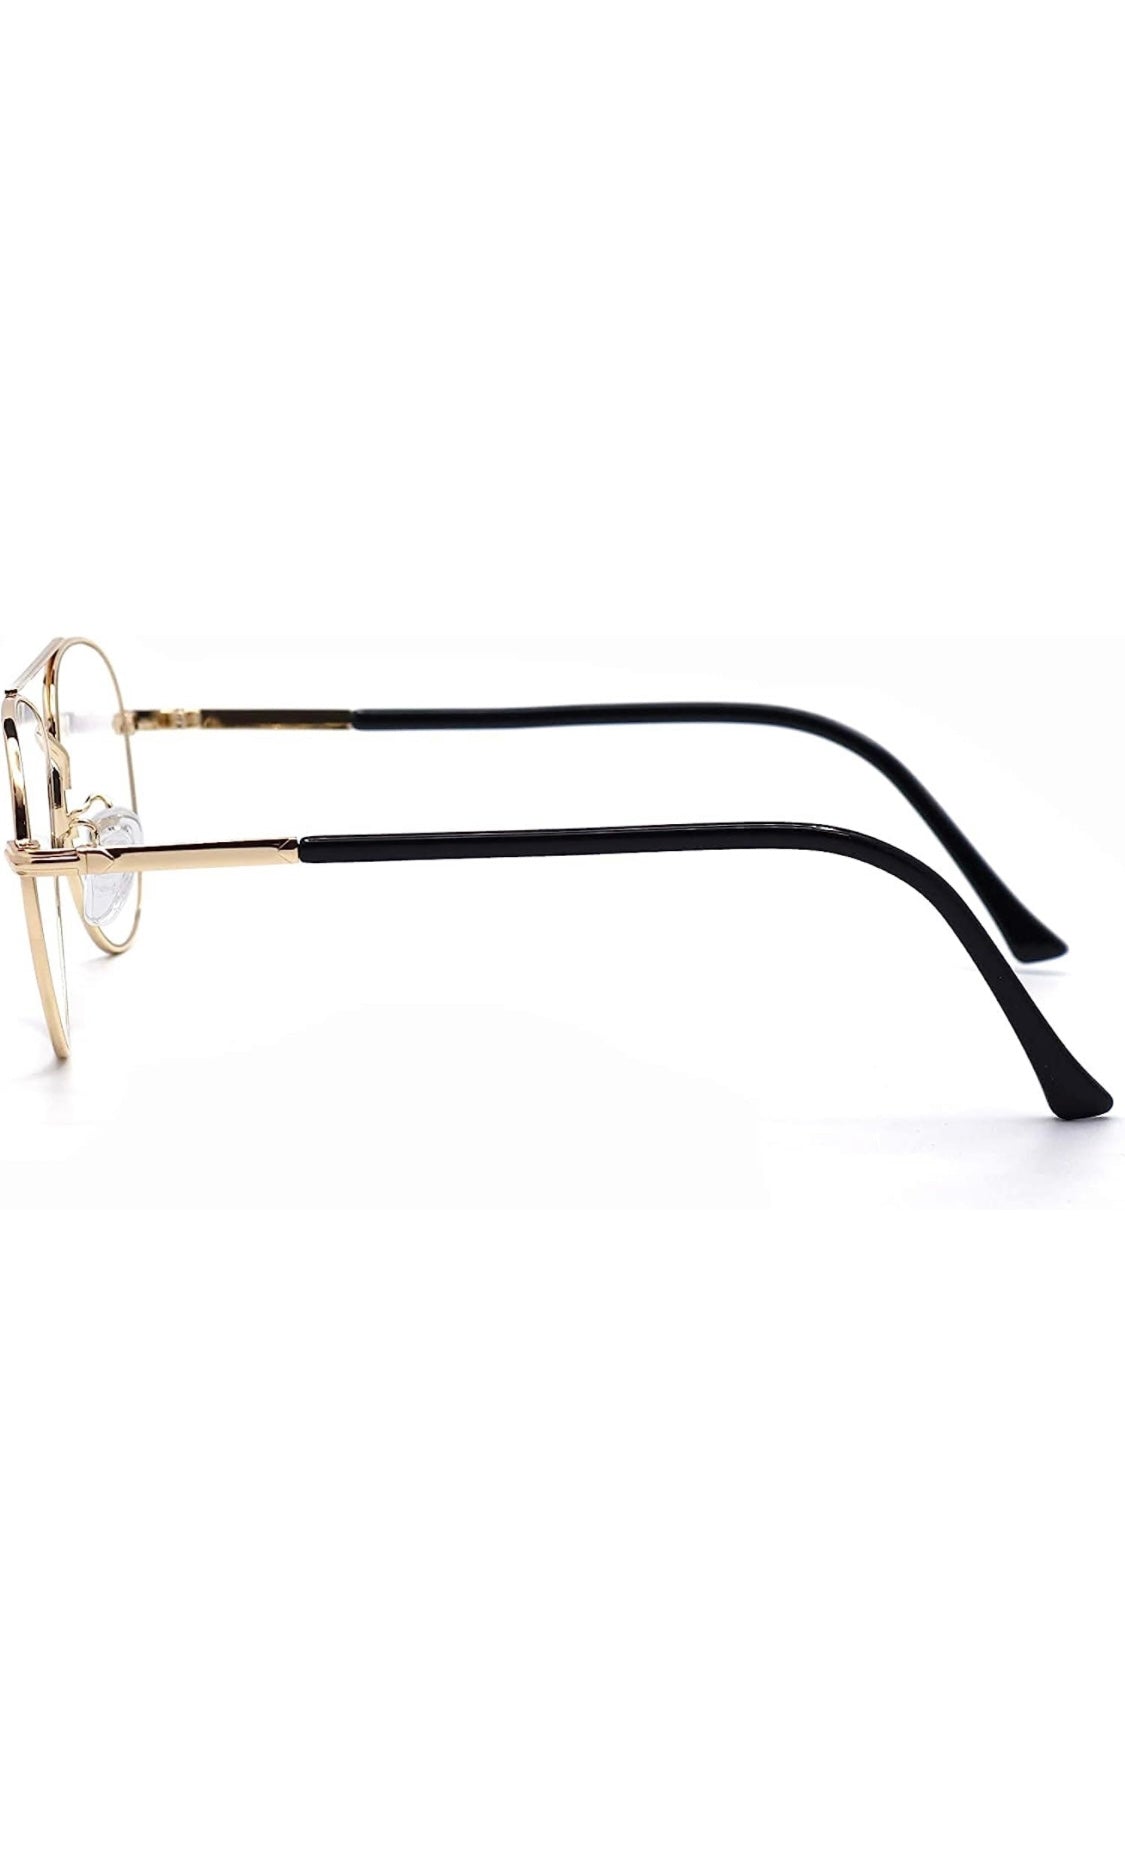 Jodykoes® Unisex Aviator Blu Cut Blue ray Protection Anti Glare Zero Power Computer Protection Eyeglasses For Men and Women Spectacle Frame (Gold) - Jodykoes ®